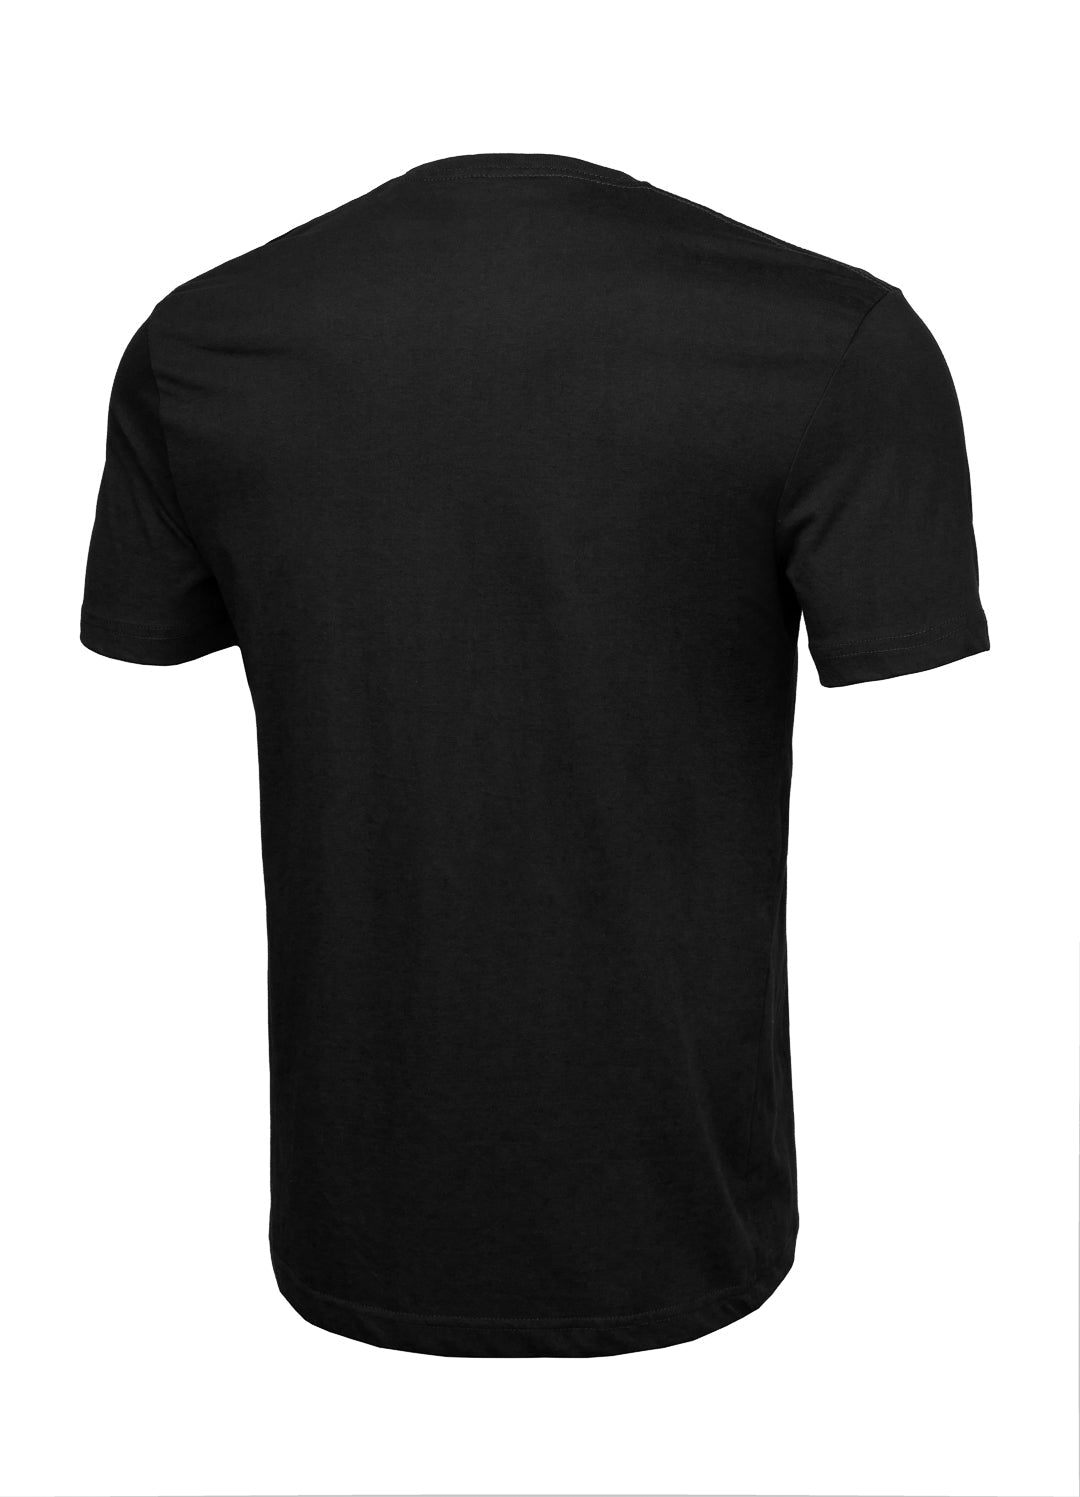 KEEP ROLLING 22 Black T-shirt